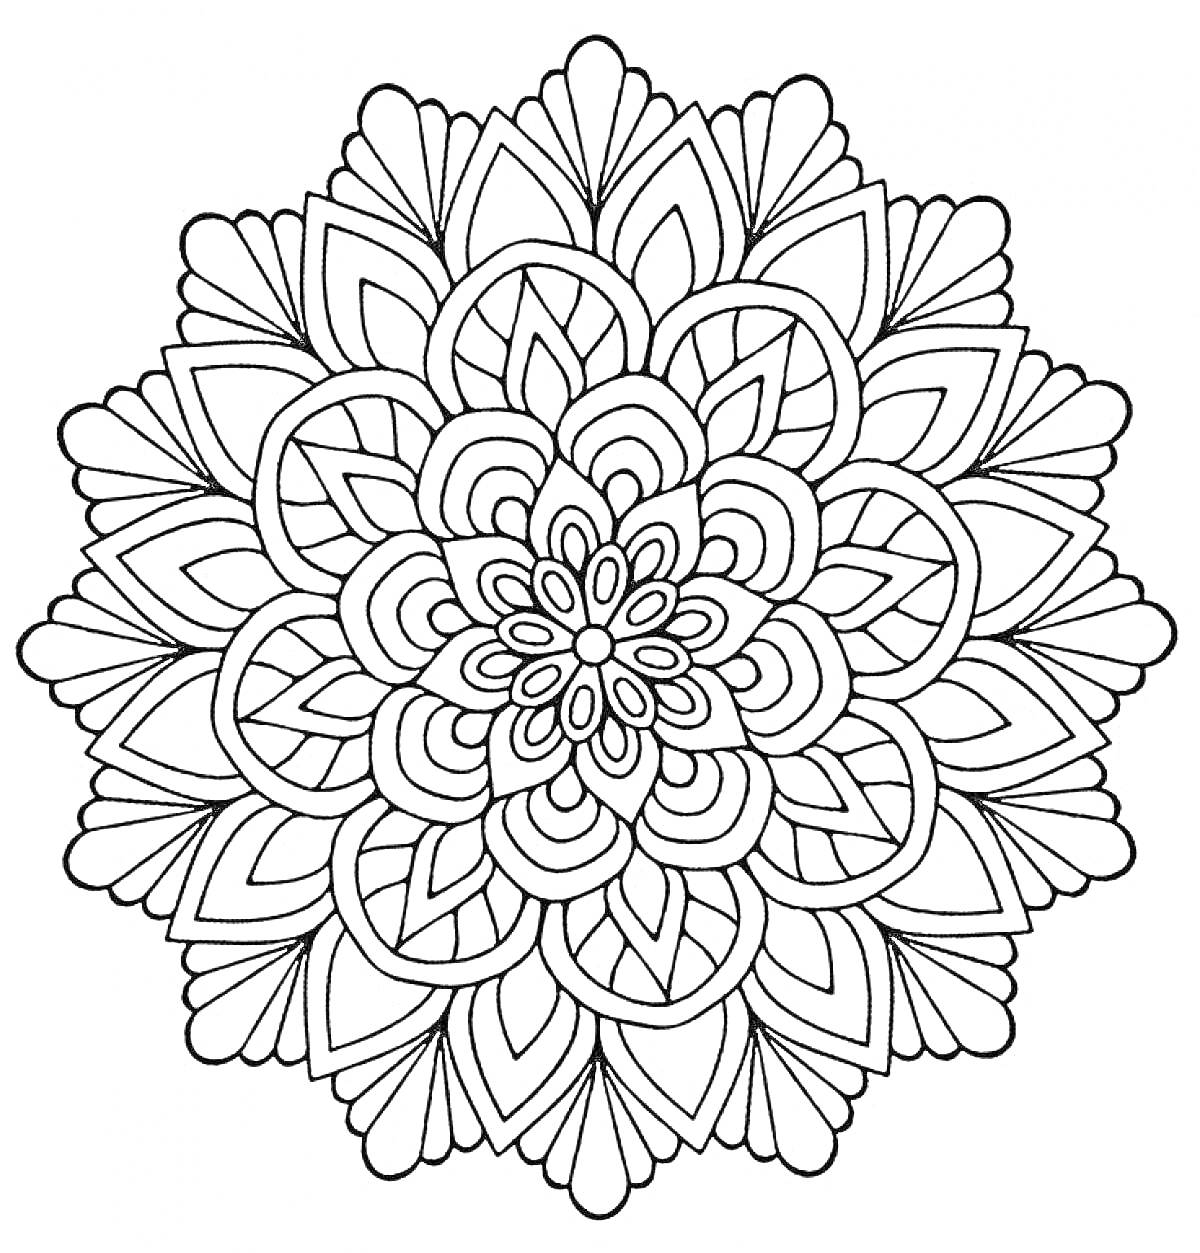 Раскраска Антистресс мандала с цветочными лепестками и узорами